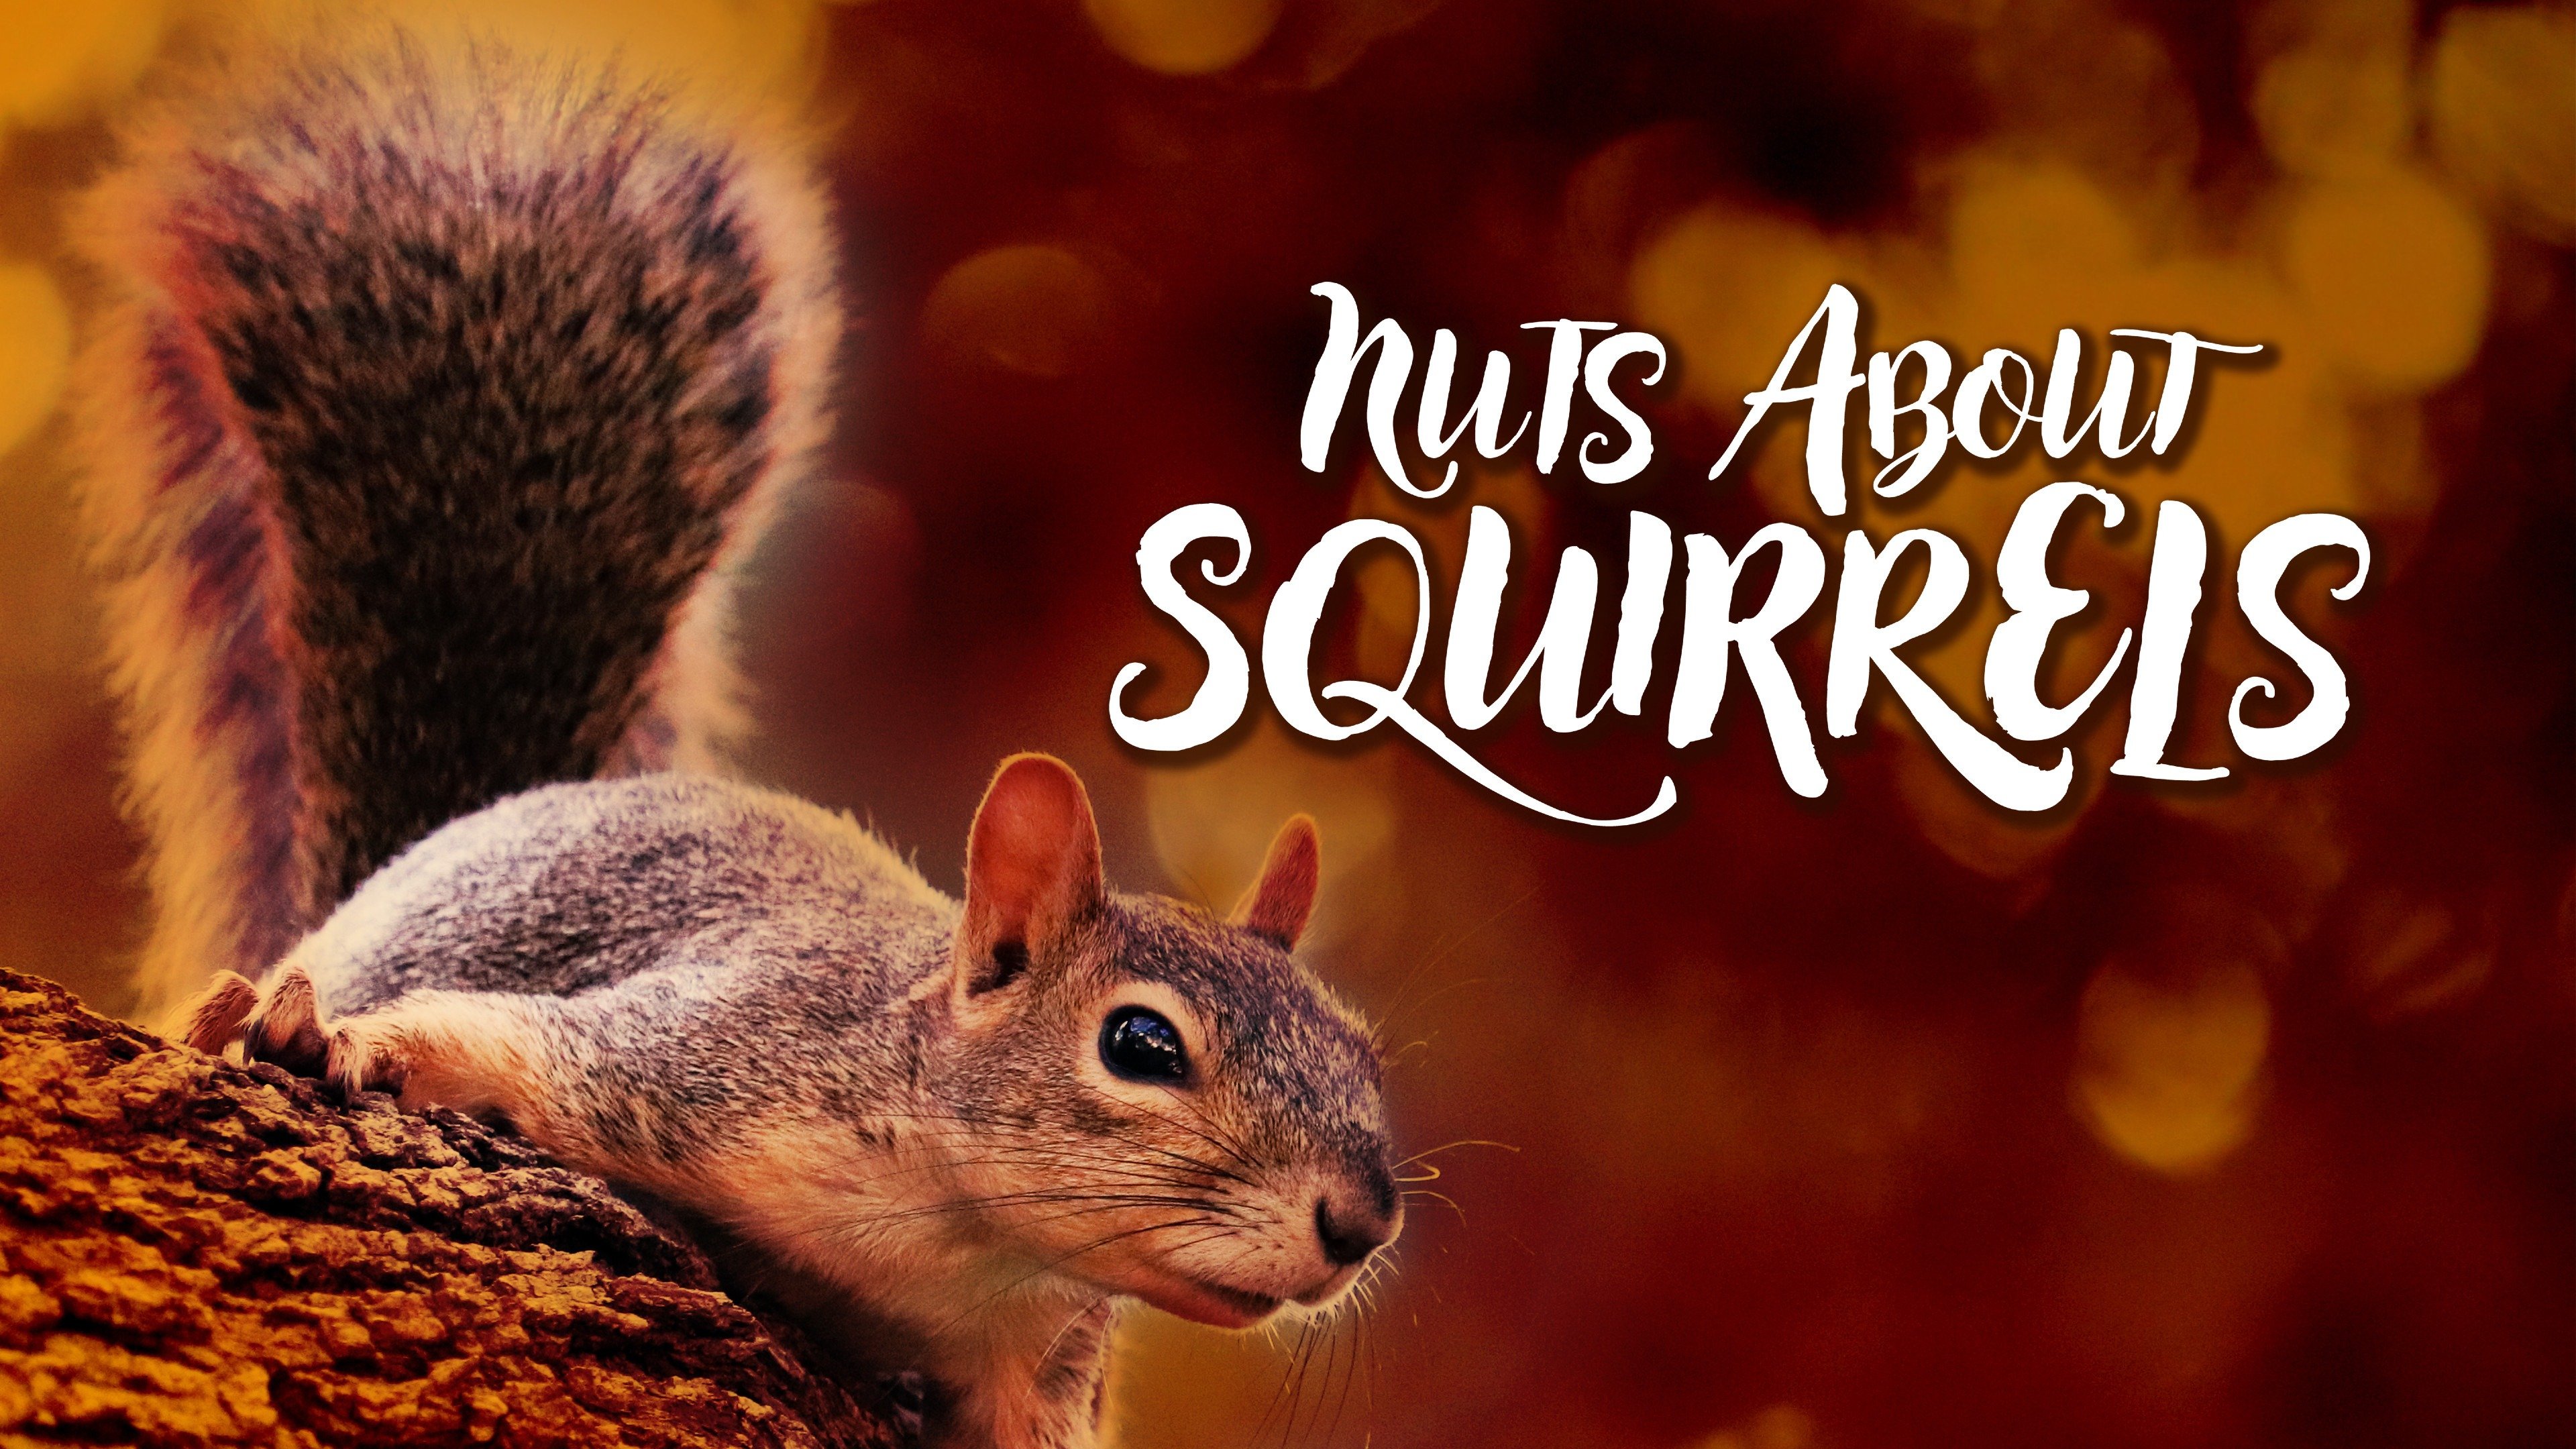 squirrel balls